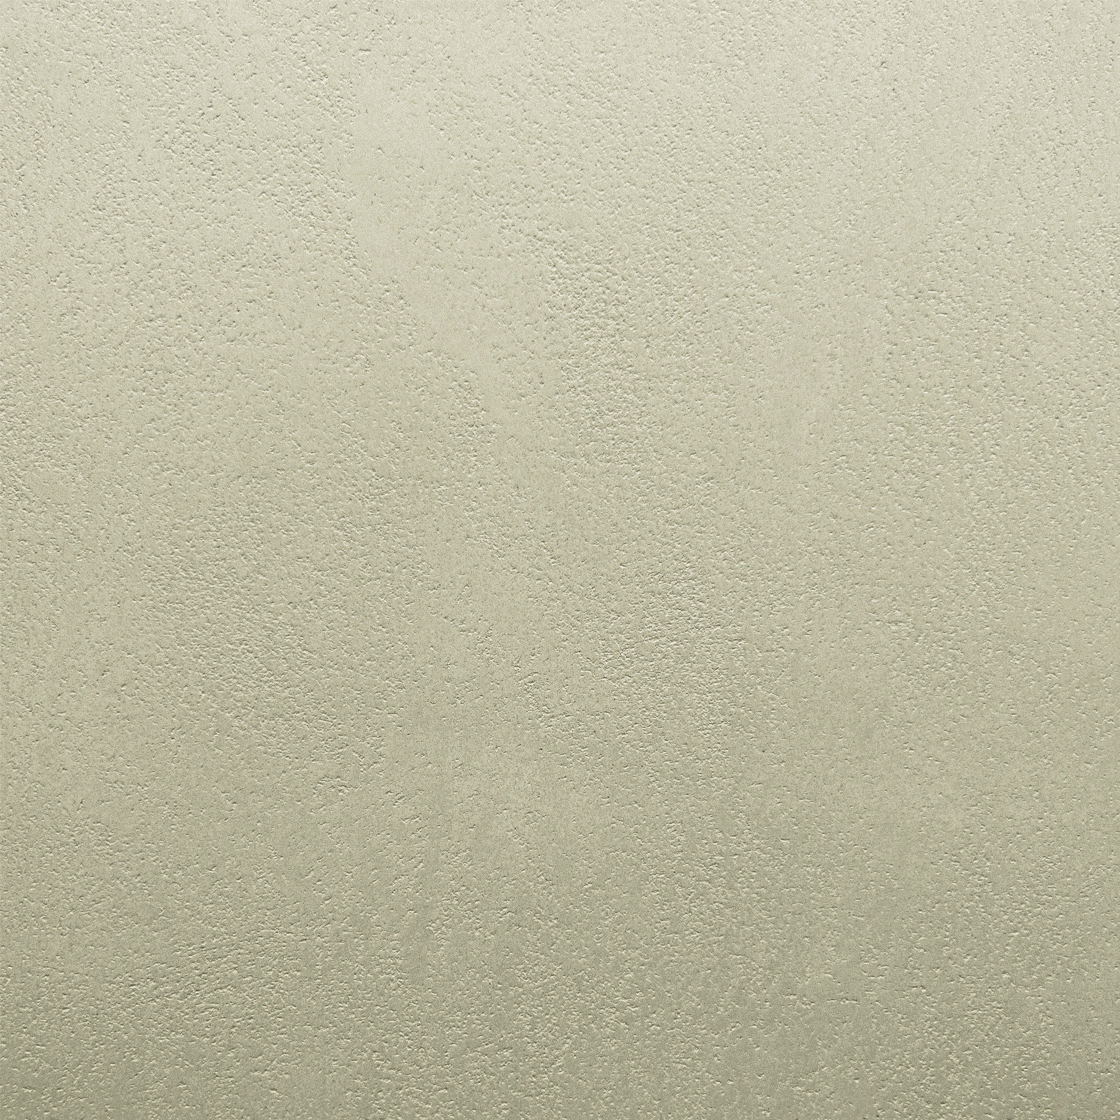 Close up of Armourcoat leatherstone exterior polished plaster finish - 62